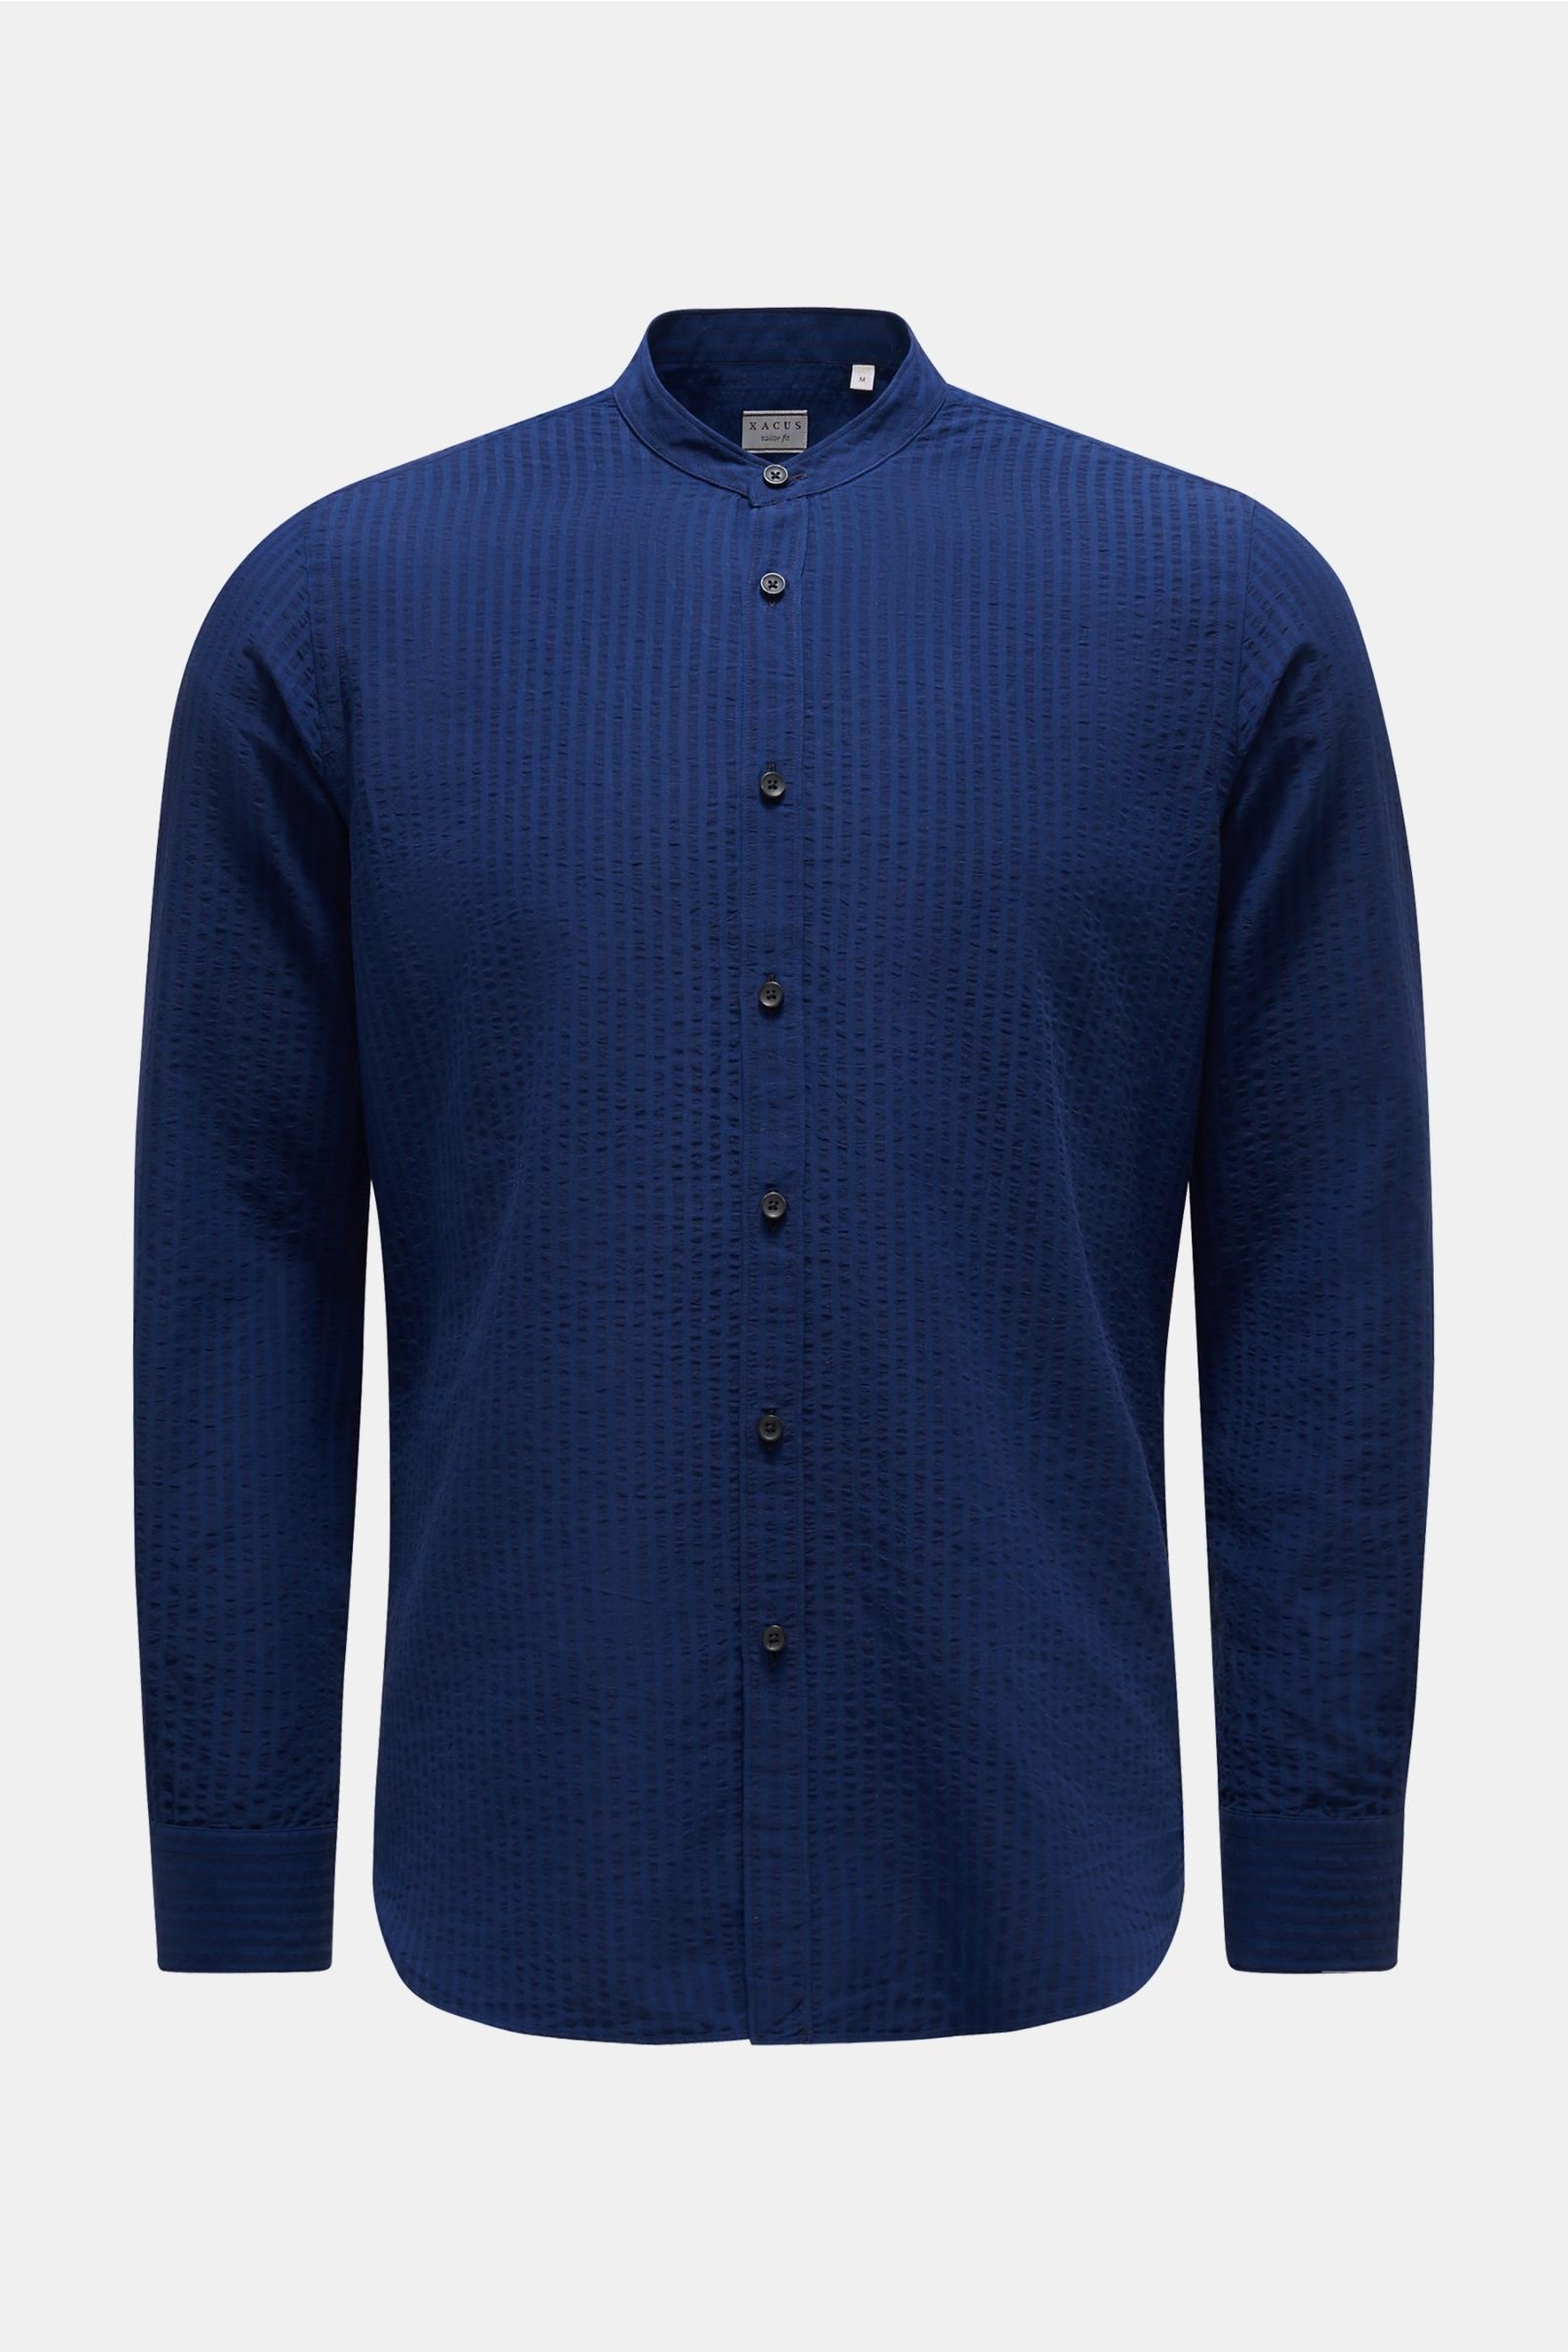 Seersucker shirt 'Tailor Fit' grandad collar dark blue/navy striped